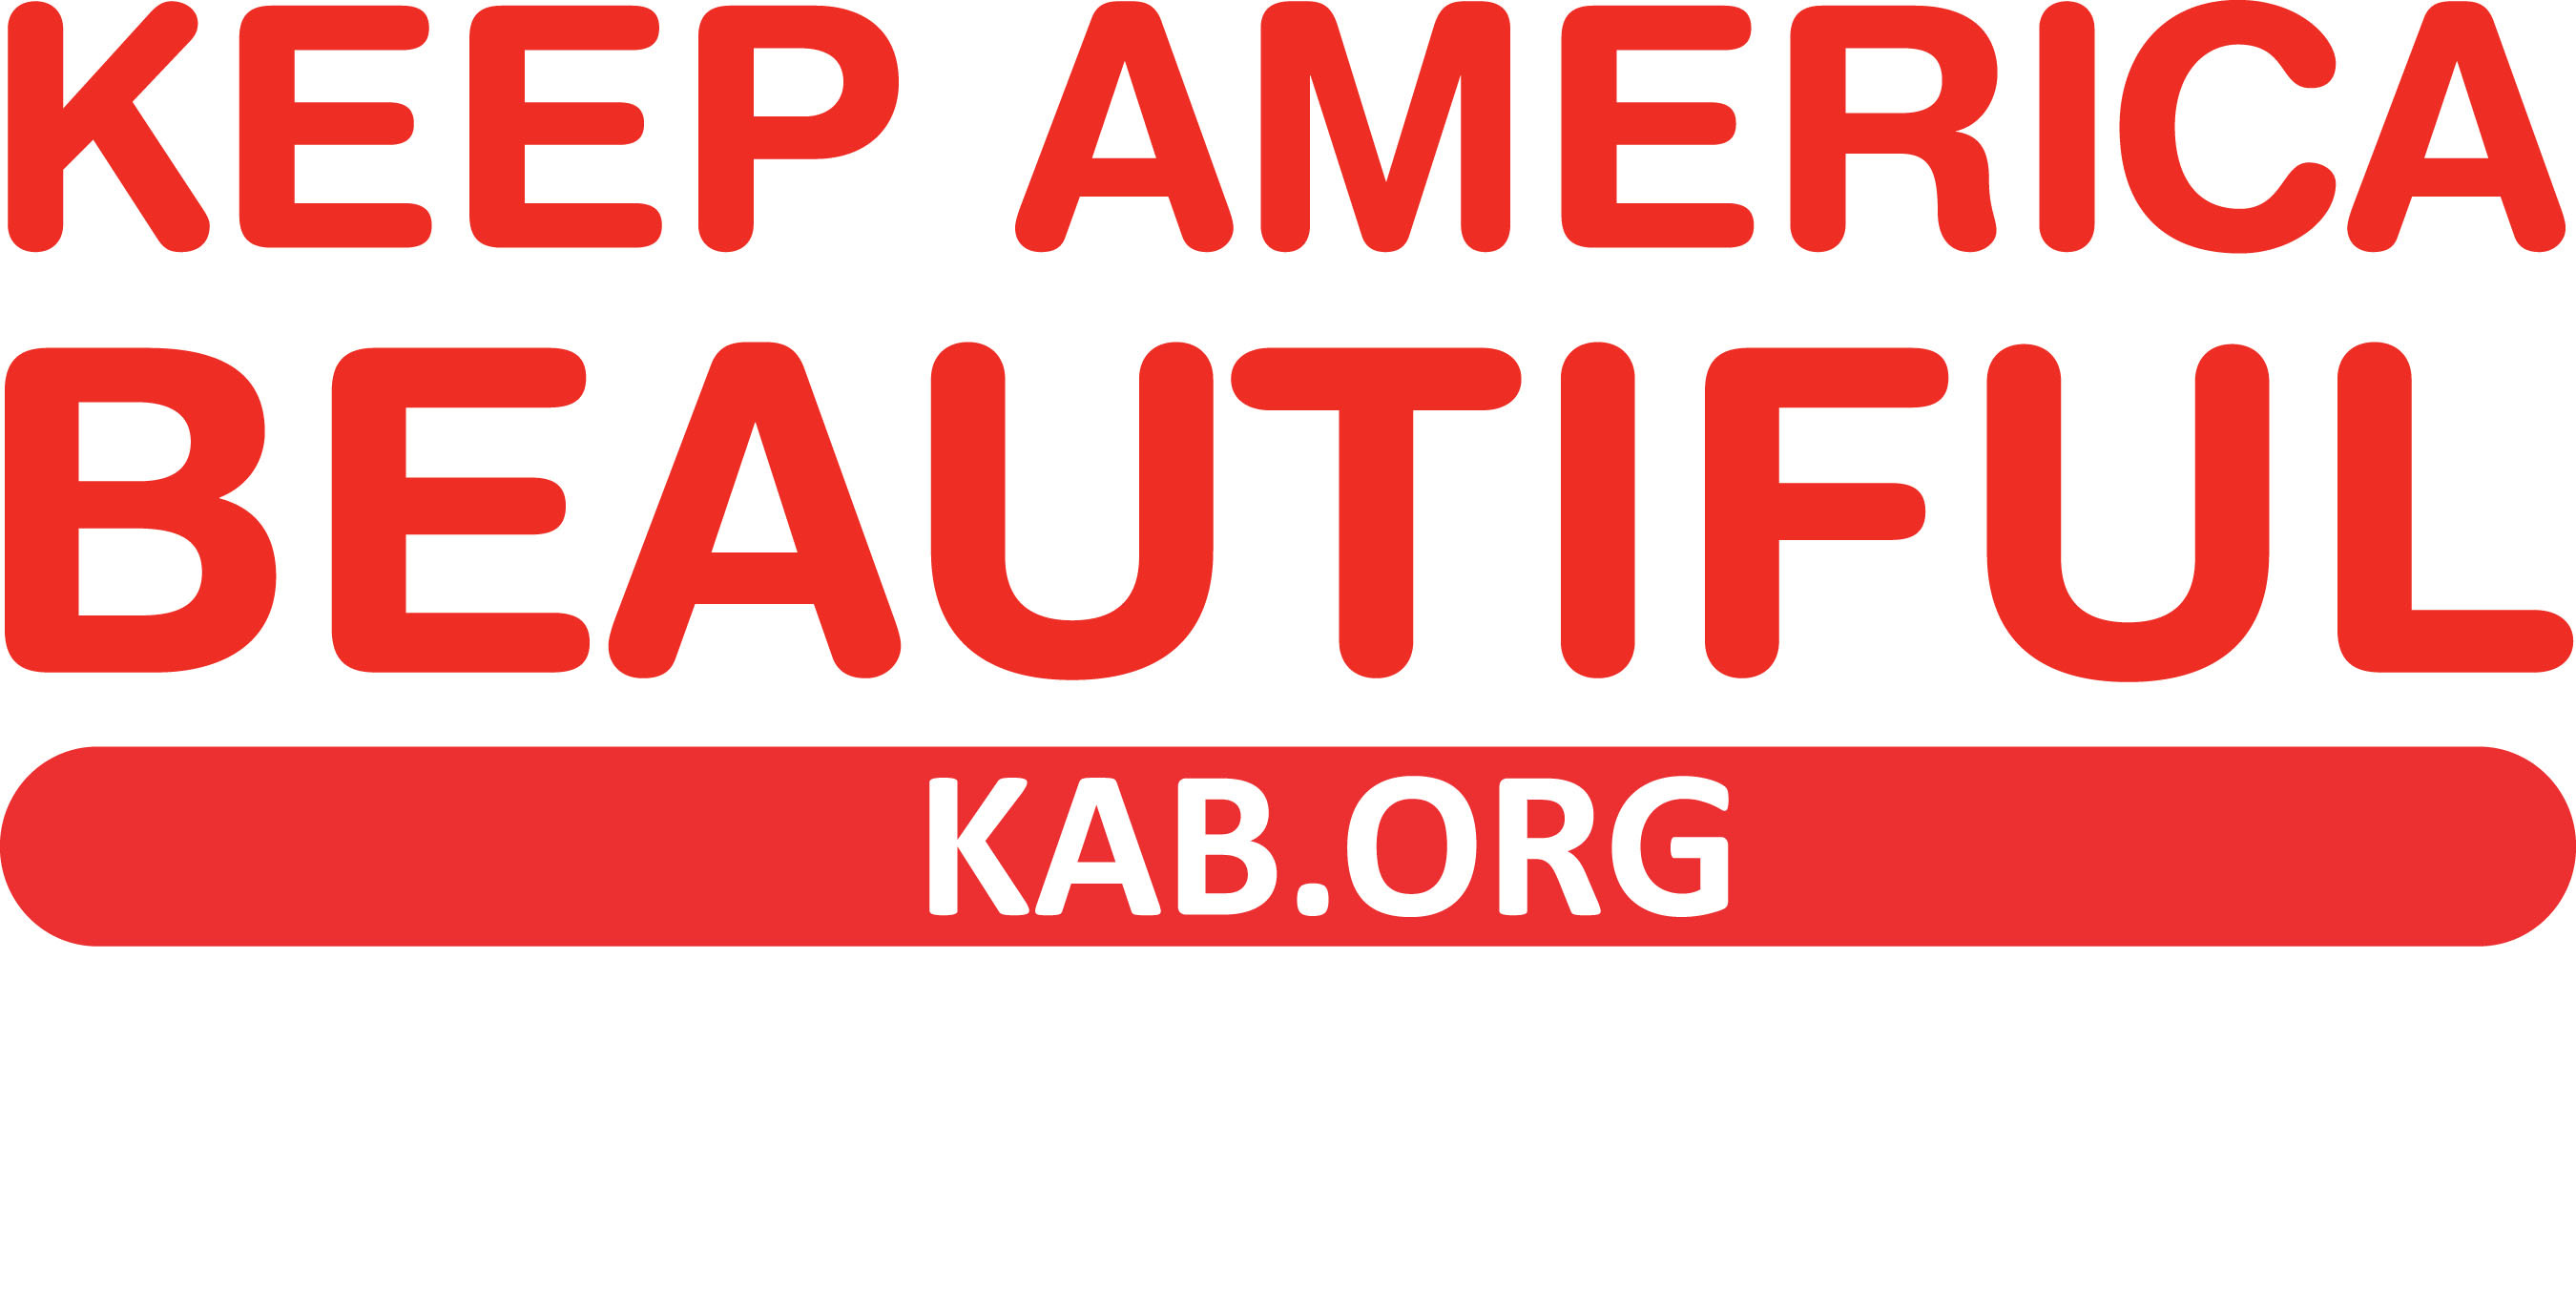 Keep America Beautiful logo